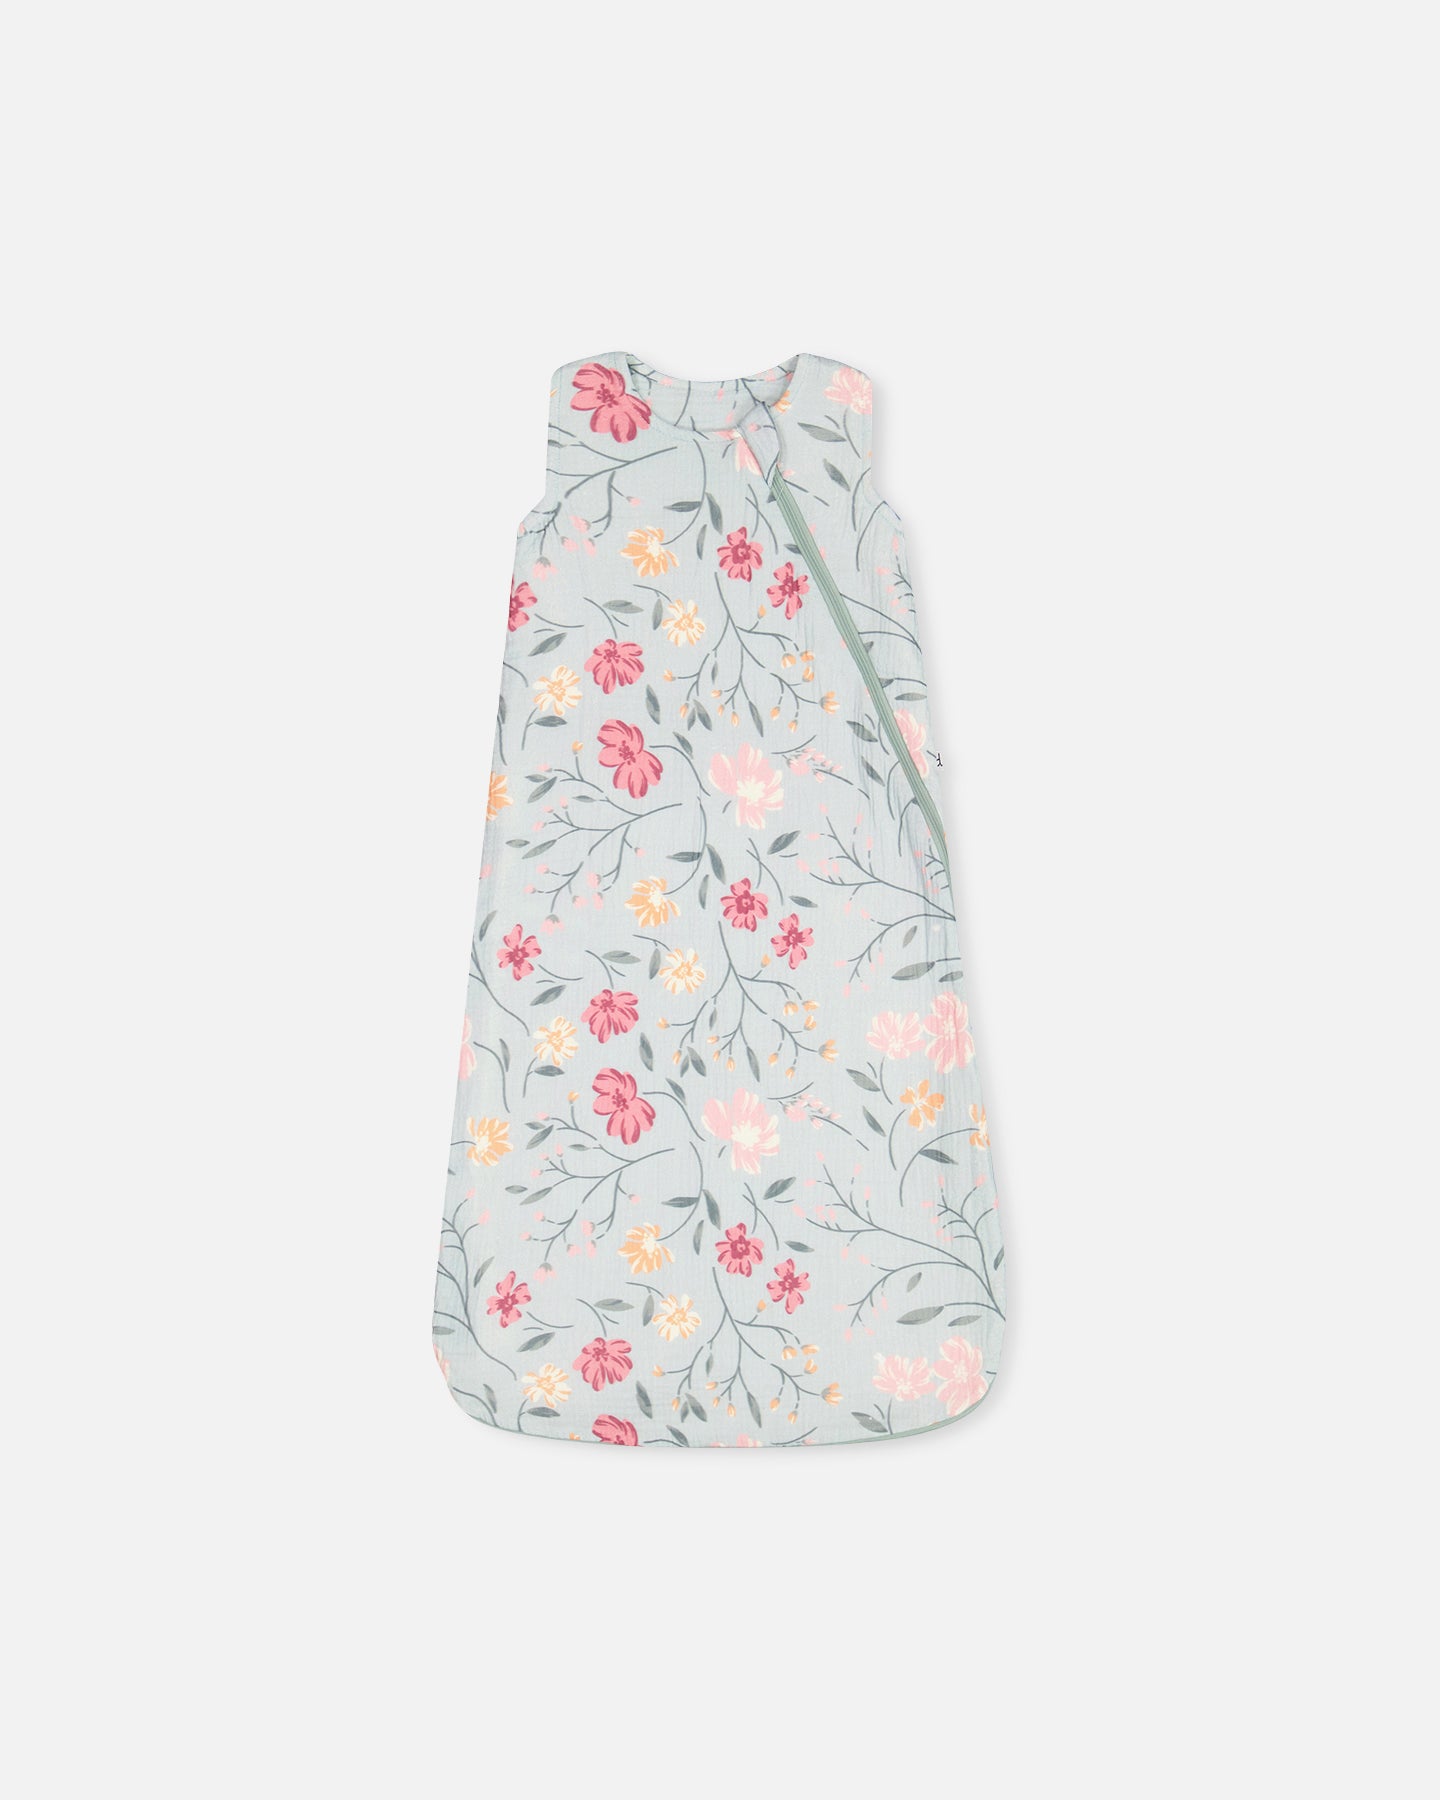 Cotton Muslin Sleep Bag Light Blue With Printed Romantic Flowers - F30BSB_073